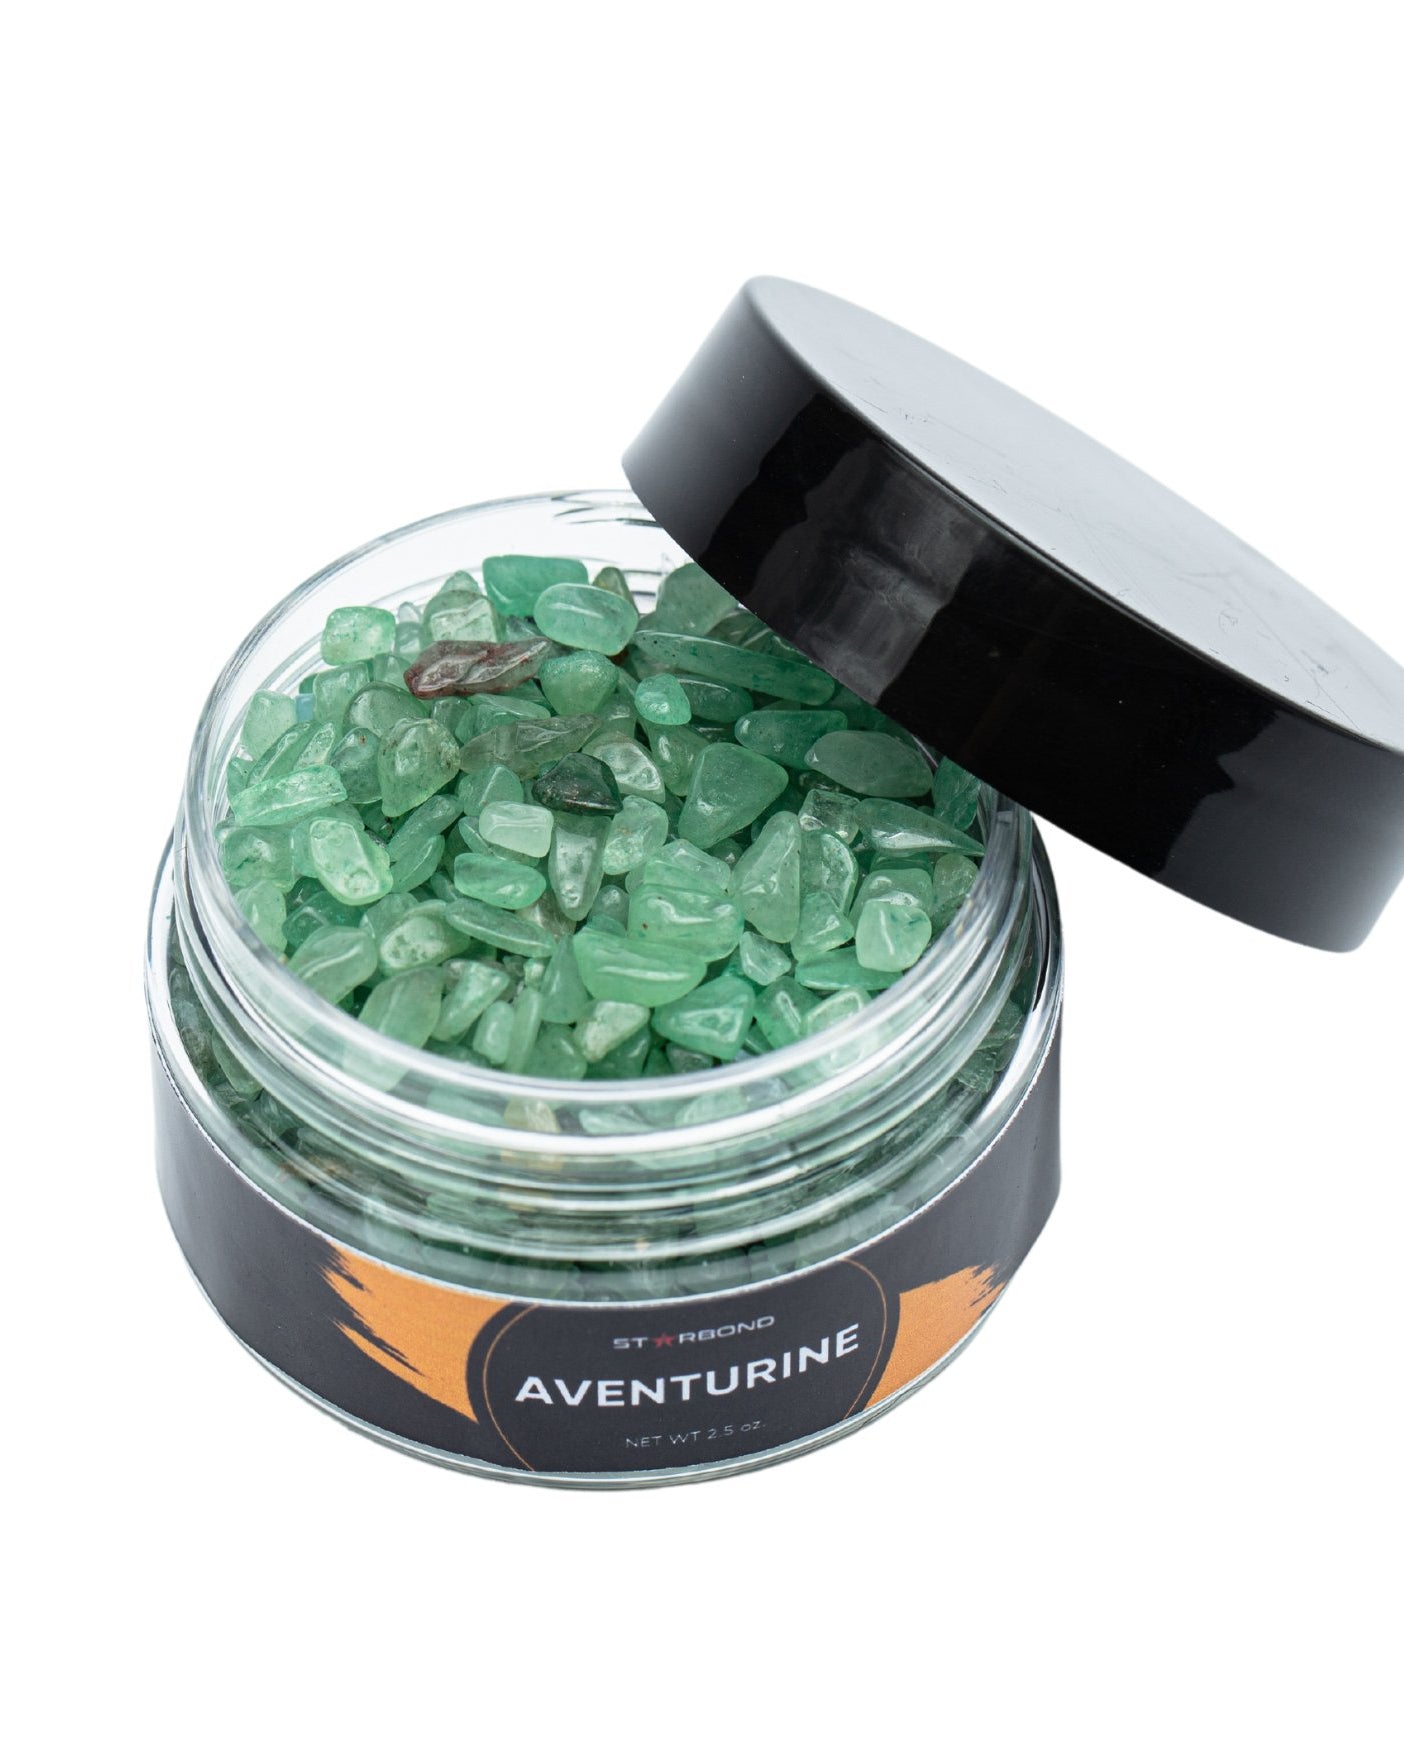 Starbond Aventurine Crushed Gemstone Inlay Crystals, 2.5 oz. | Adhesive | Starbond